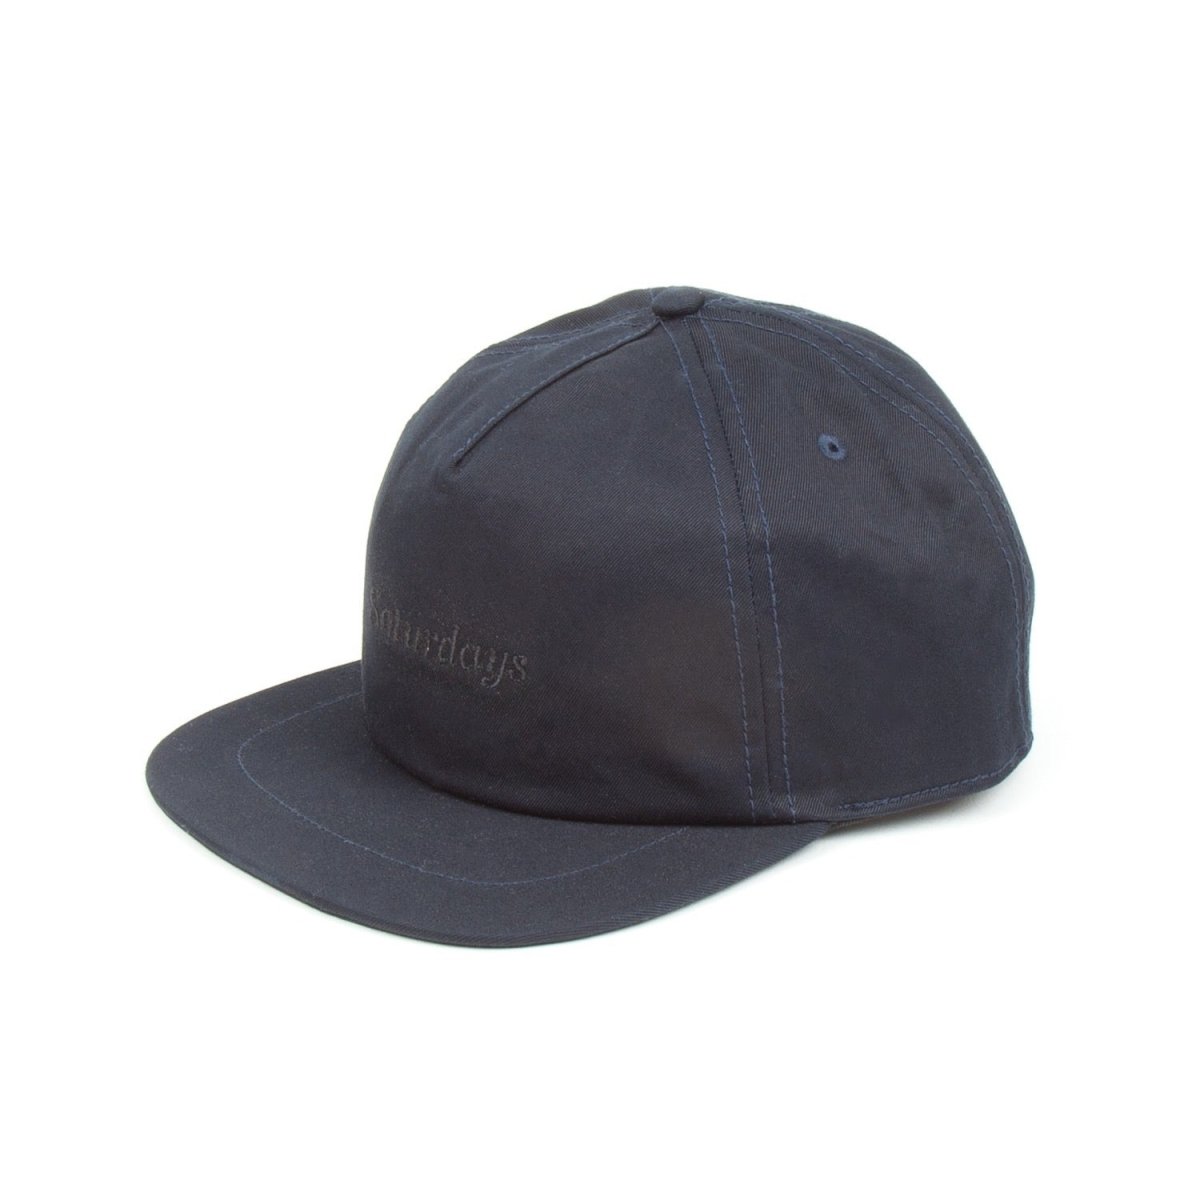 Hats & Caps for Men | Headwear - Number Six